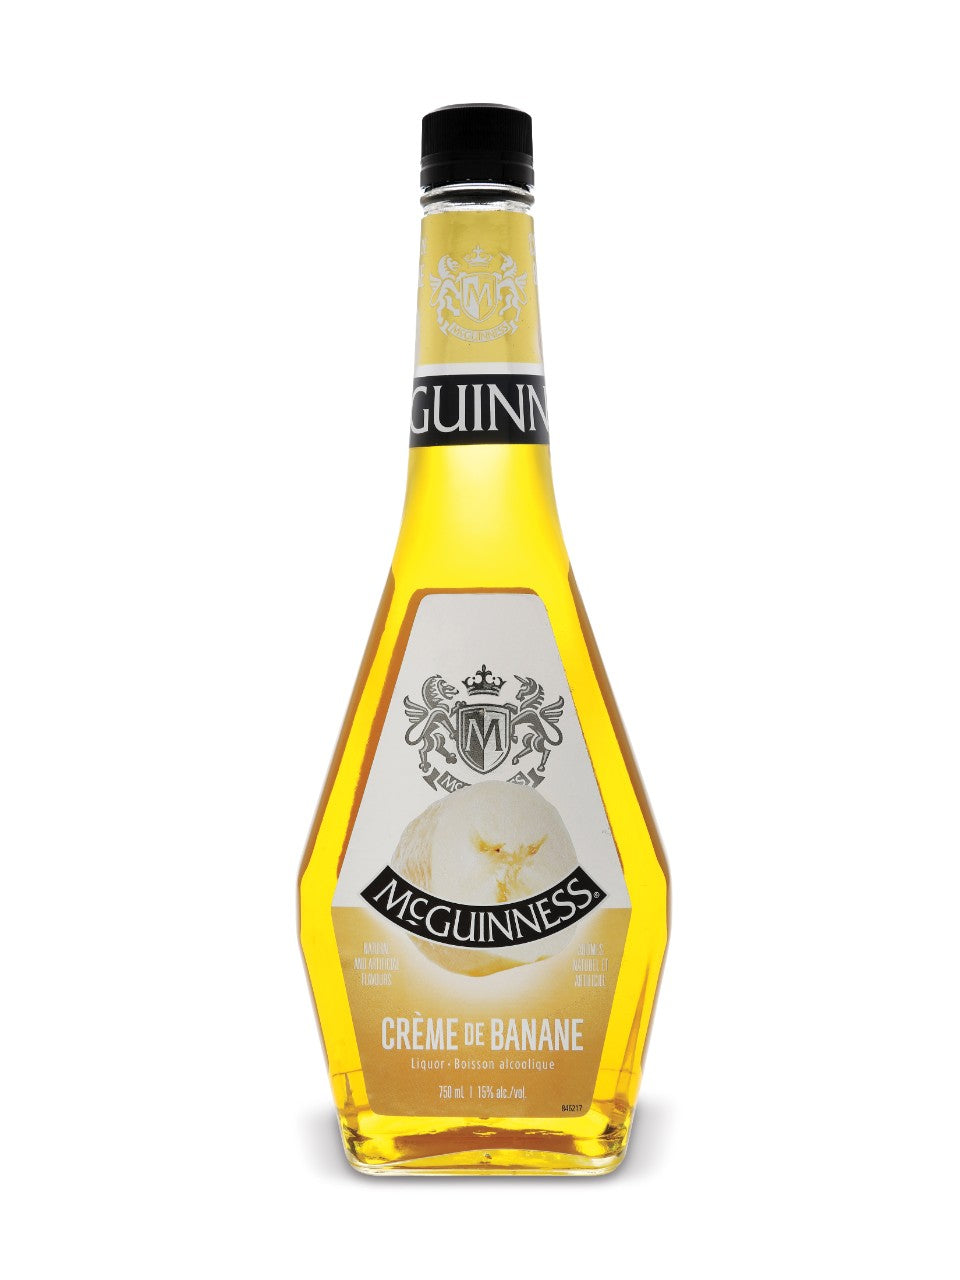 McGuinness Creme De Banane 750 mL bottle